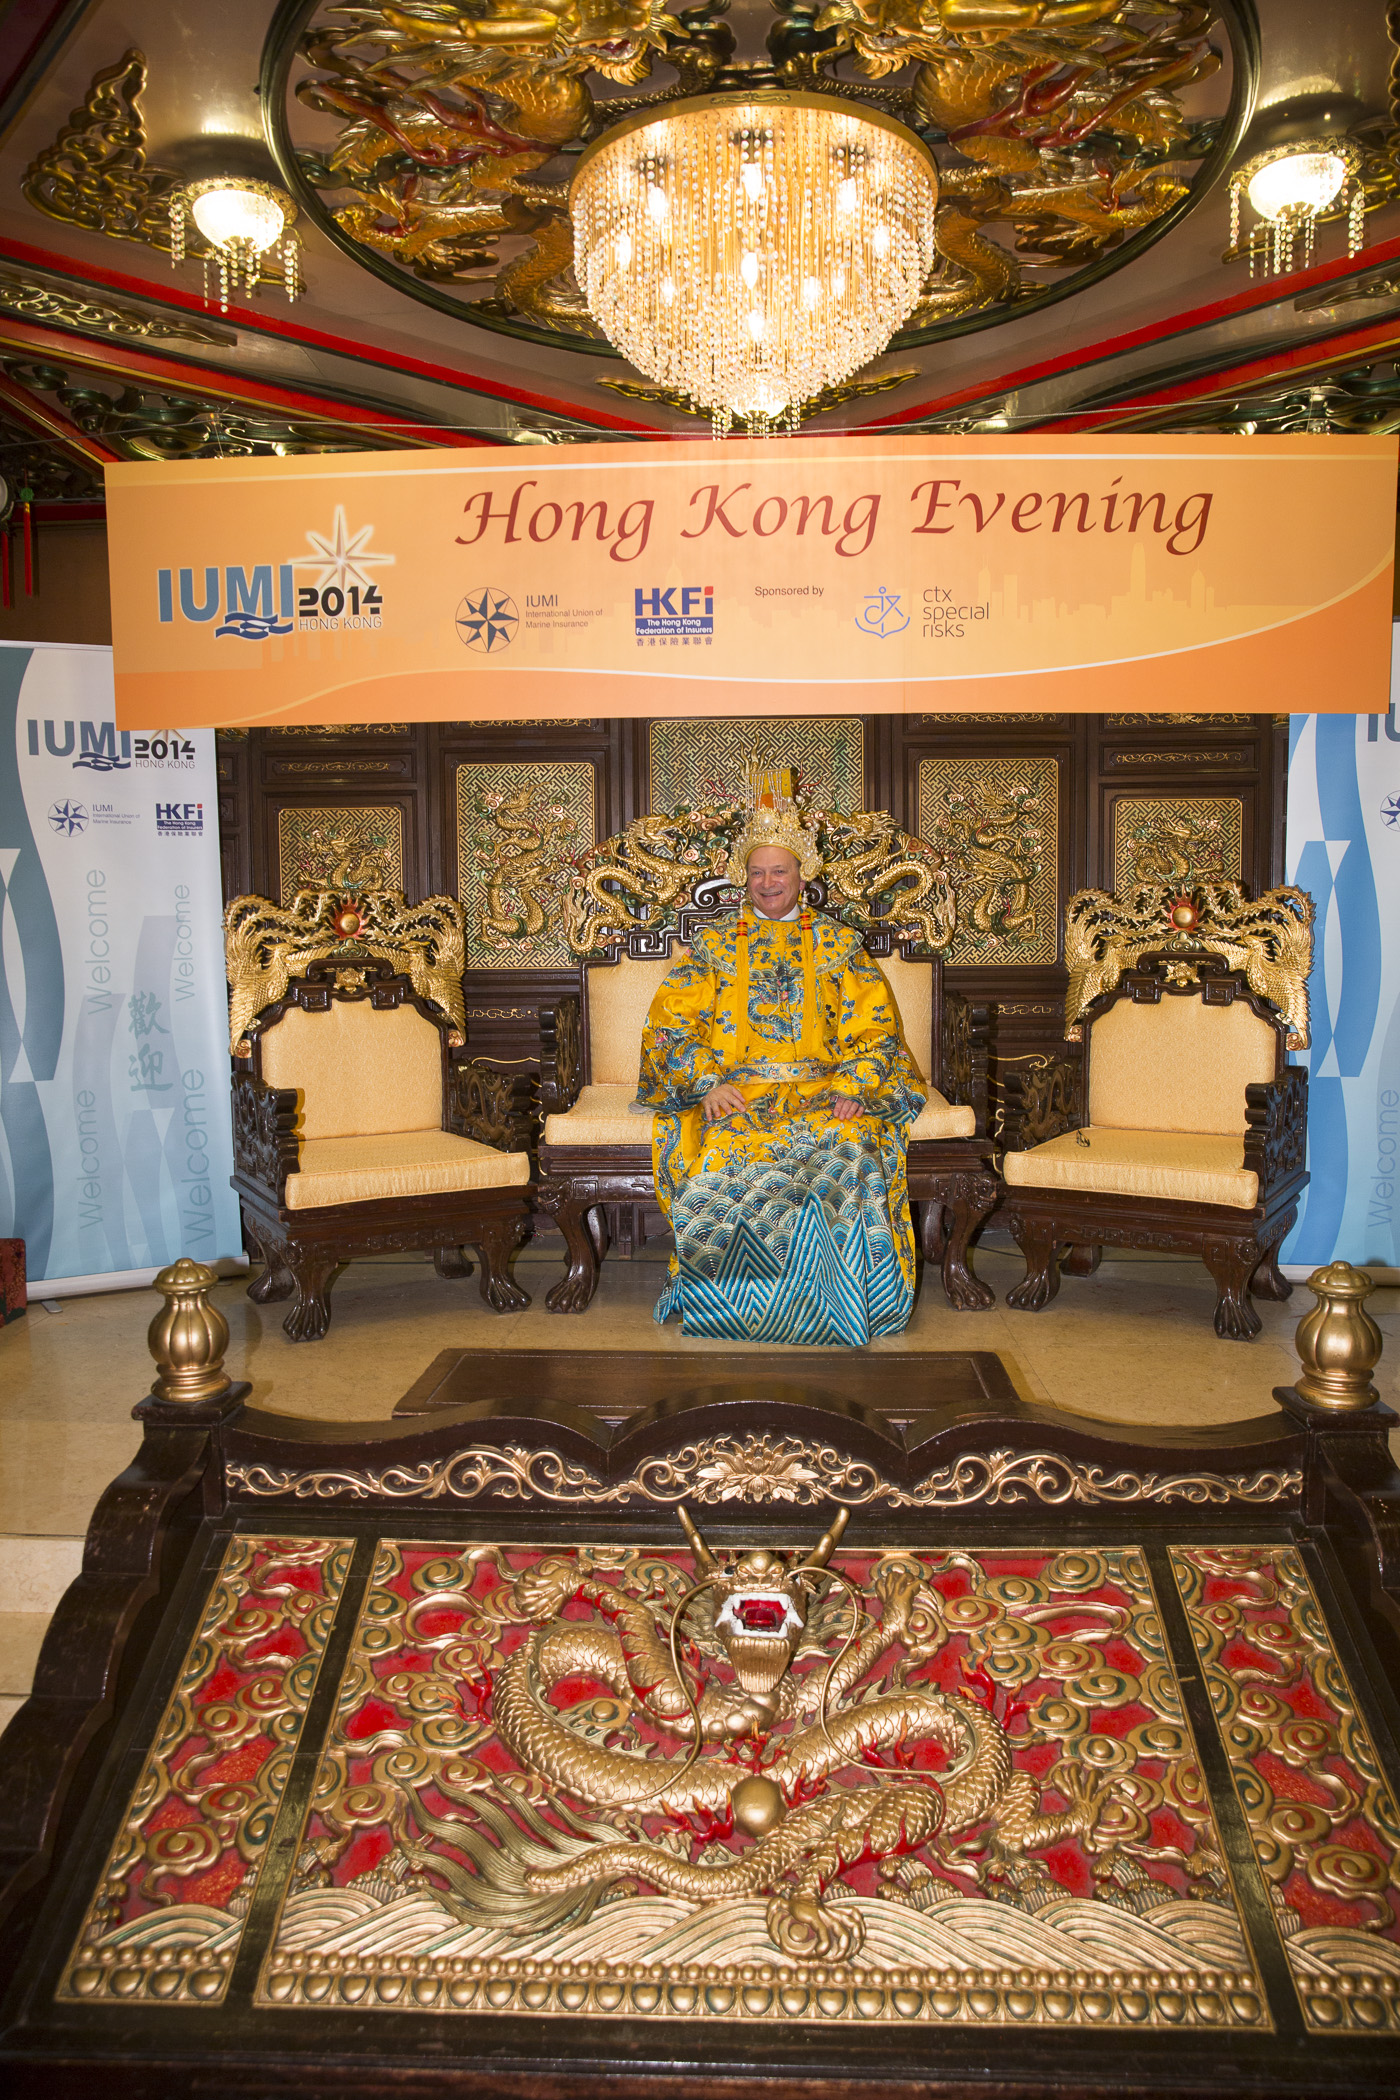 International Union of Marine Insurance 2014 Hong Kong - Dinner (on the Throne) (1)